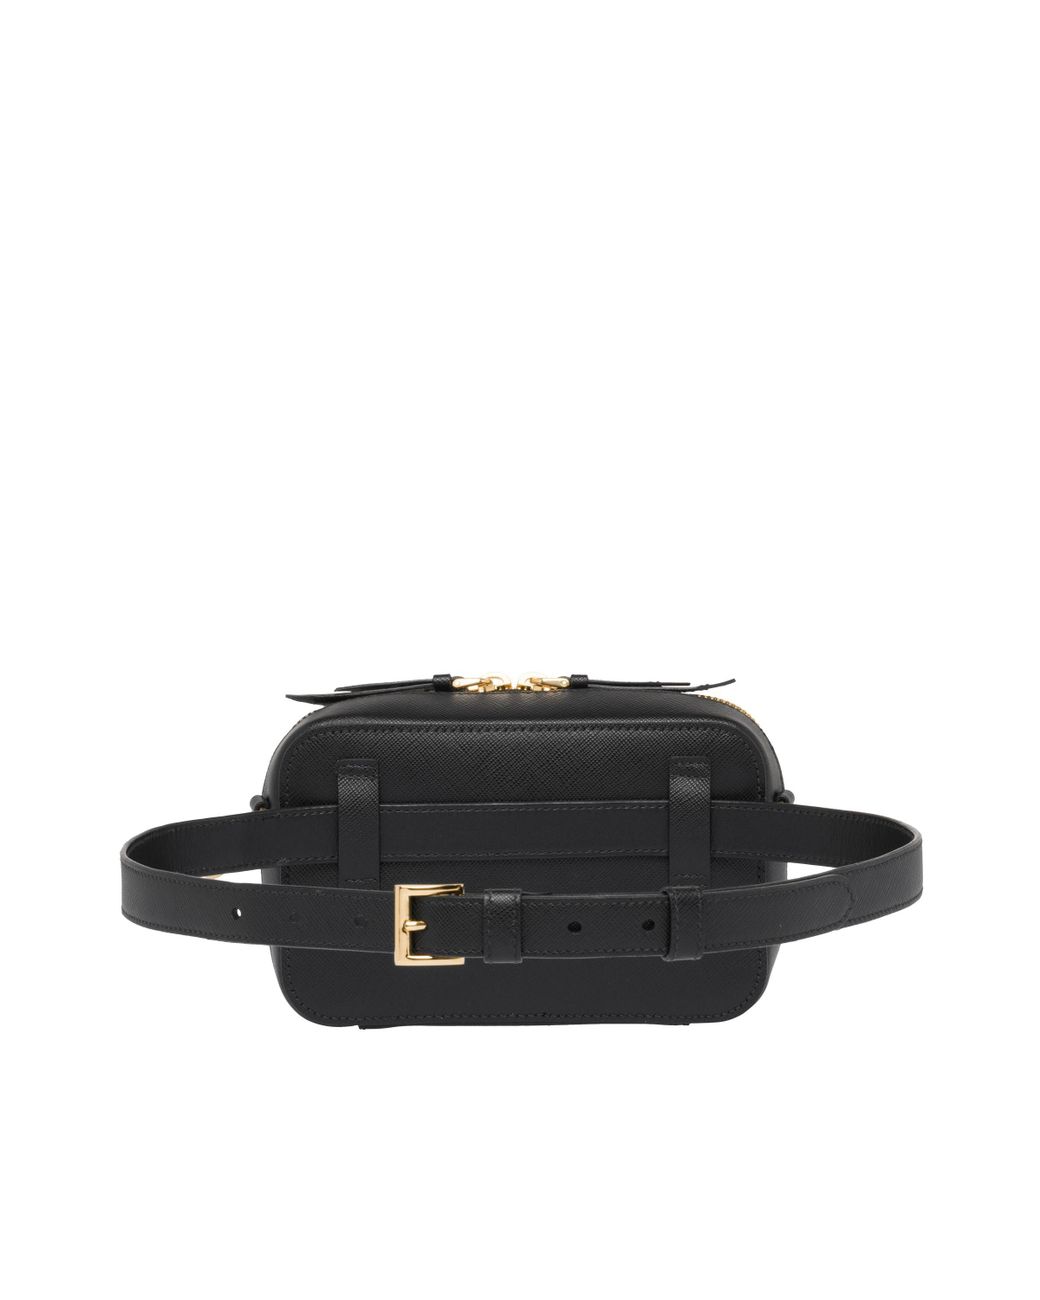 Prada Women's Black Odette Saffiano Leather Belt Bag